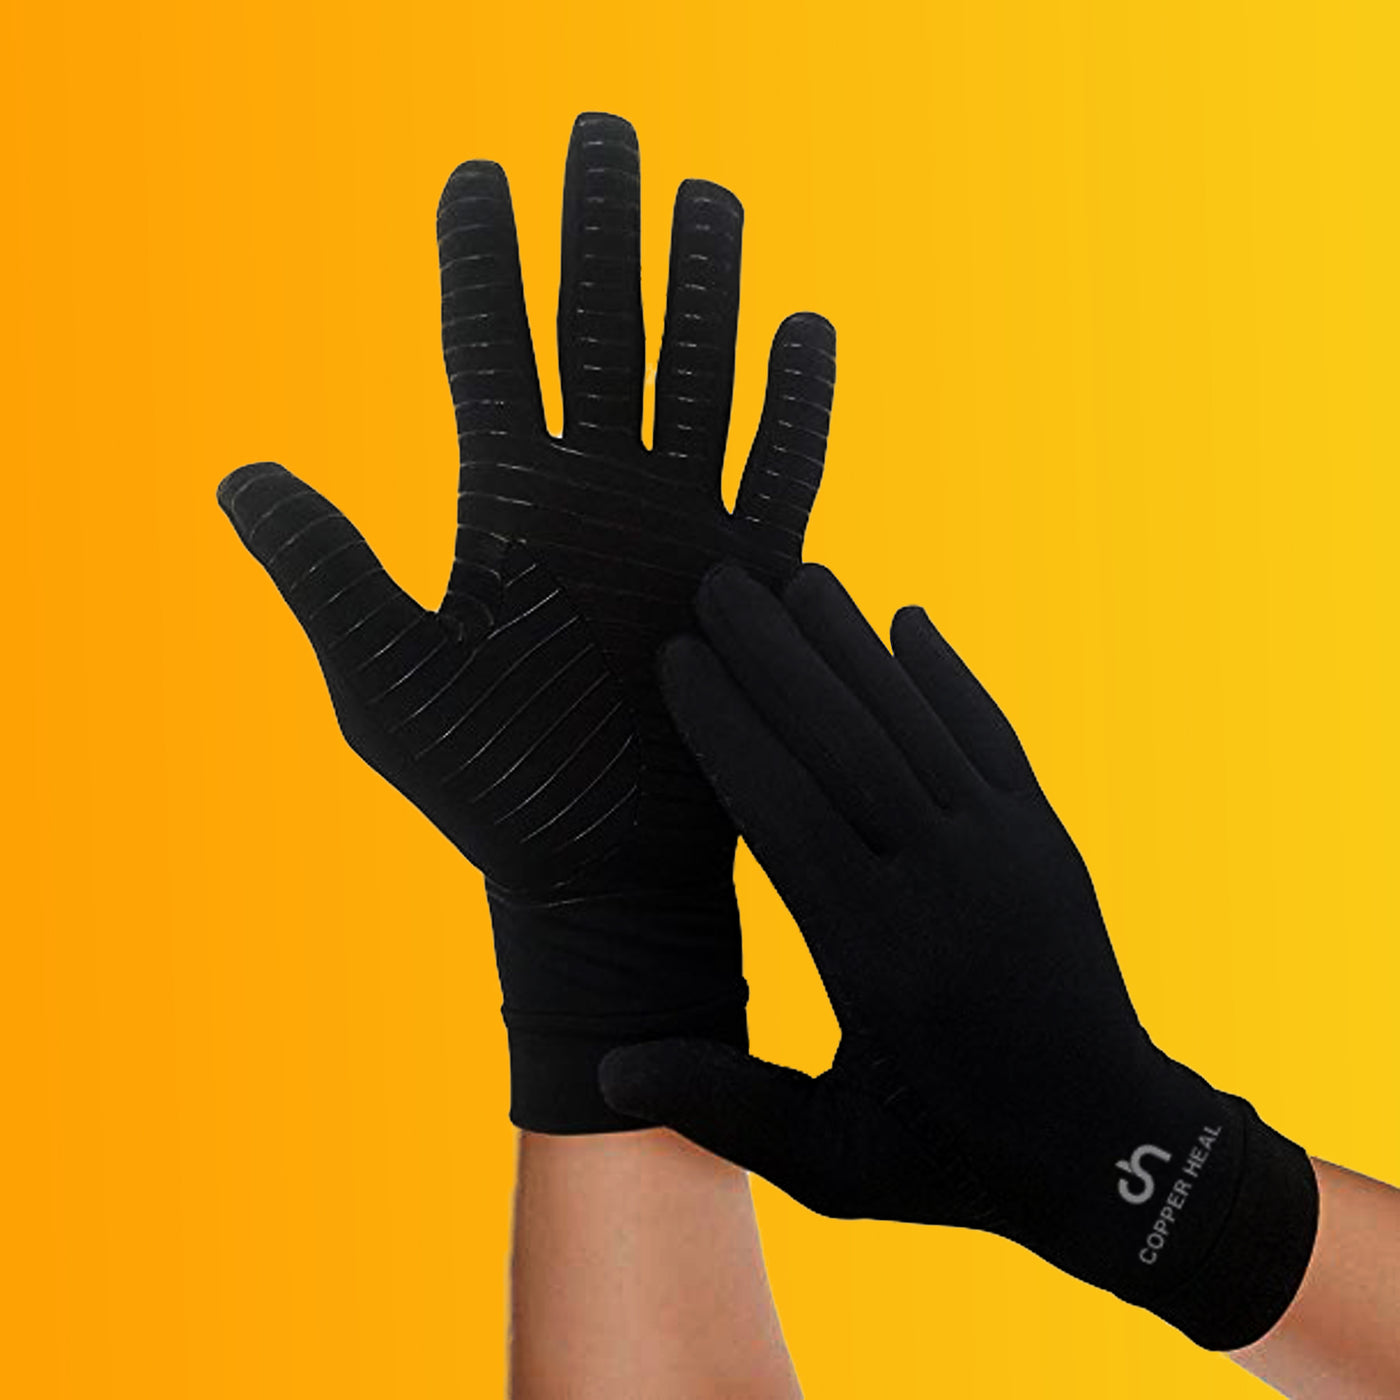 Arthritis Copper Compression Full Hand Gloves - COPPER HEAL